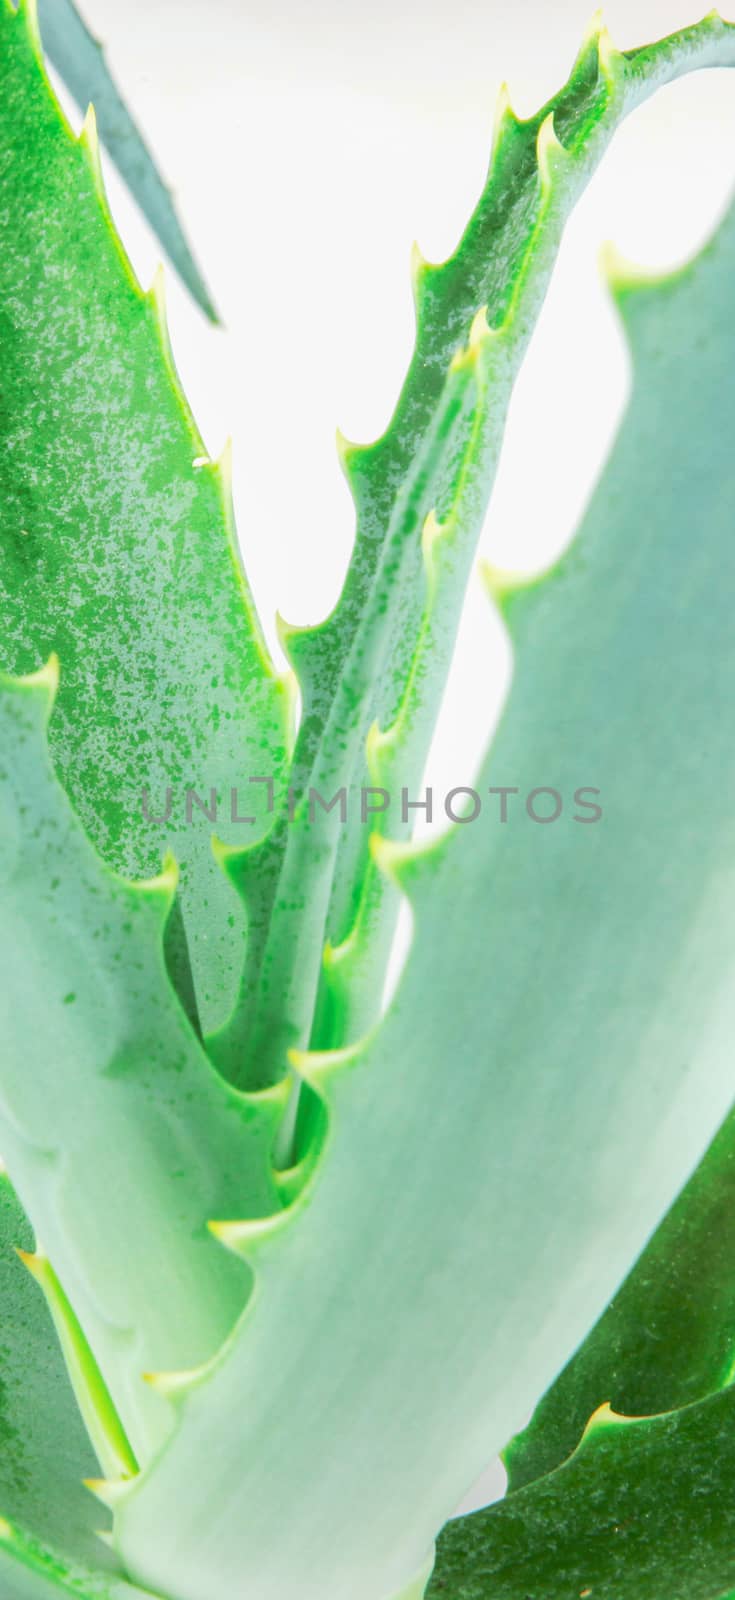 Close-Up Of Aloe Vera Slice On White Background by nenovbrothers